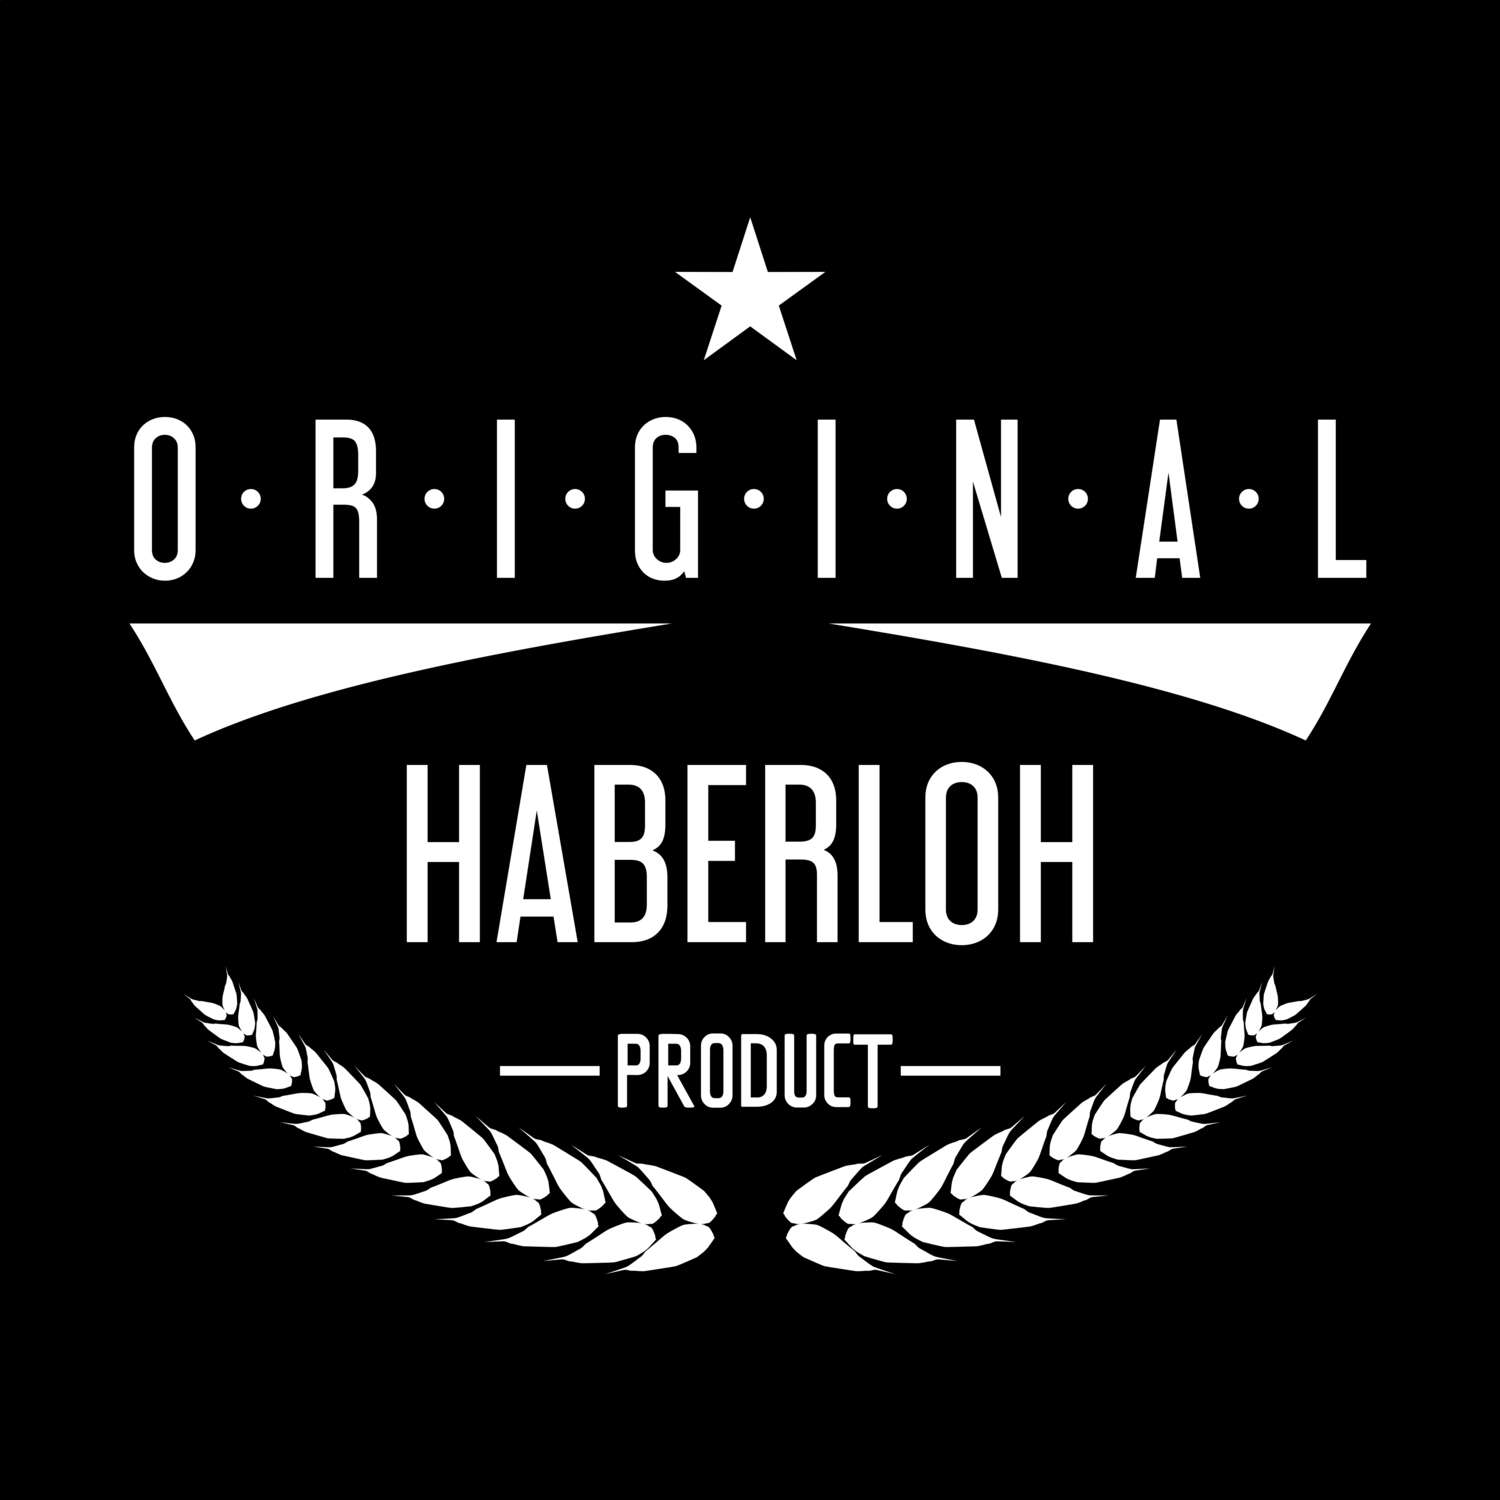 Haberloh T-Shirt »Original Product«